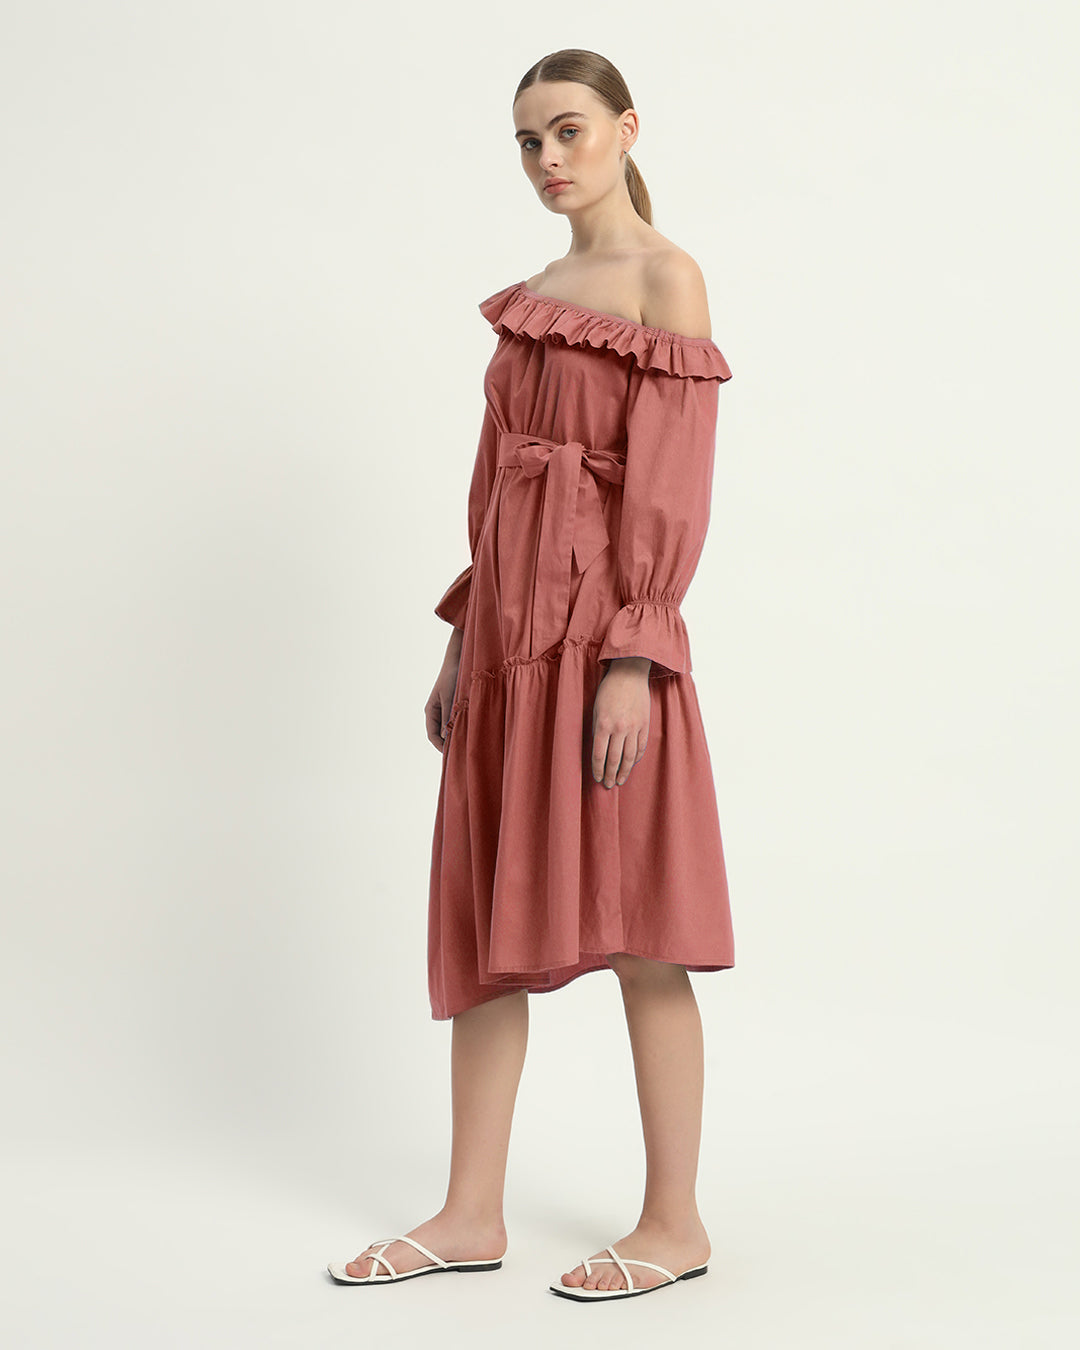 The Stellata  Ivory Pink Cotton Dress